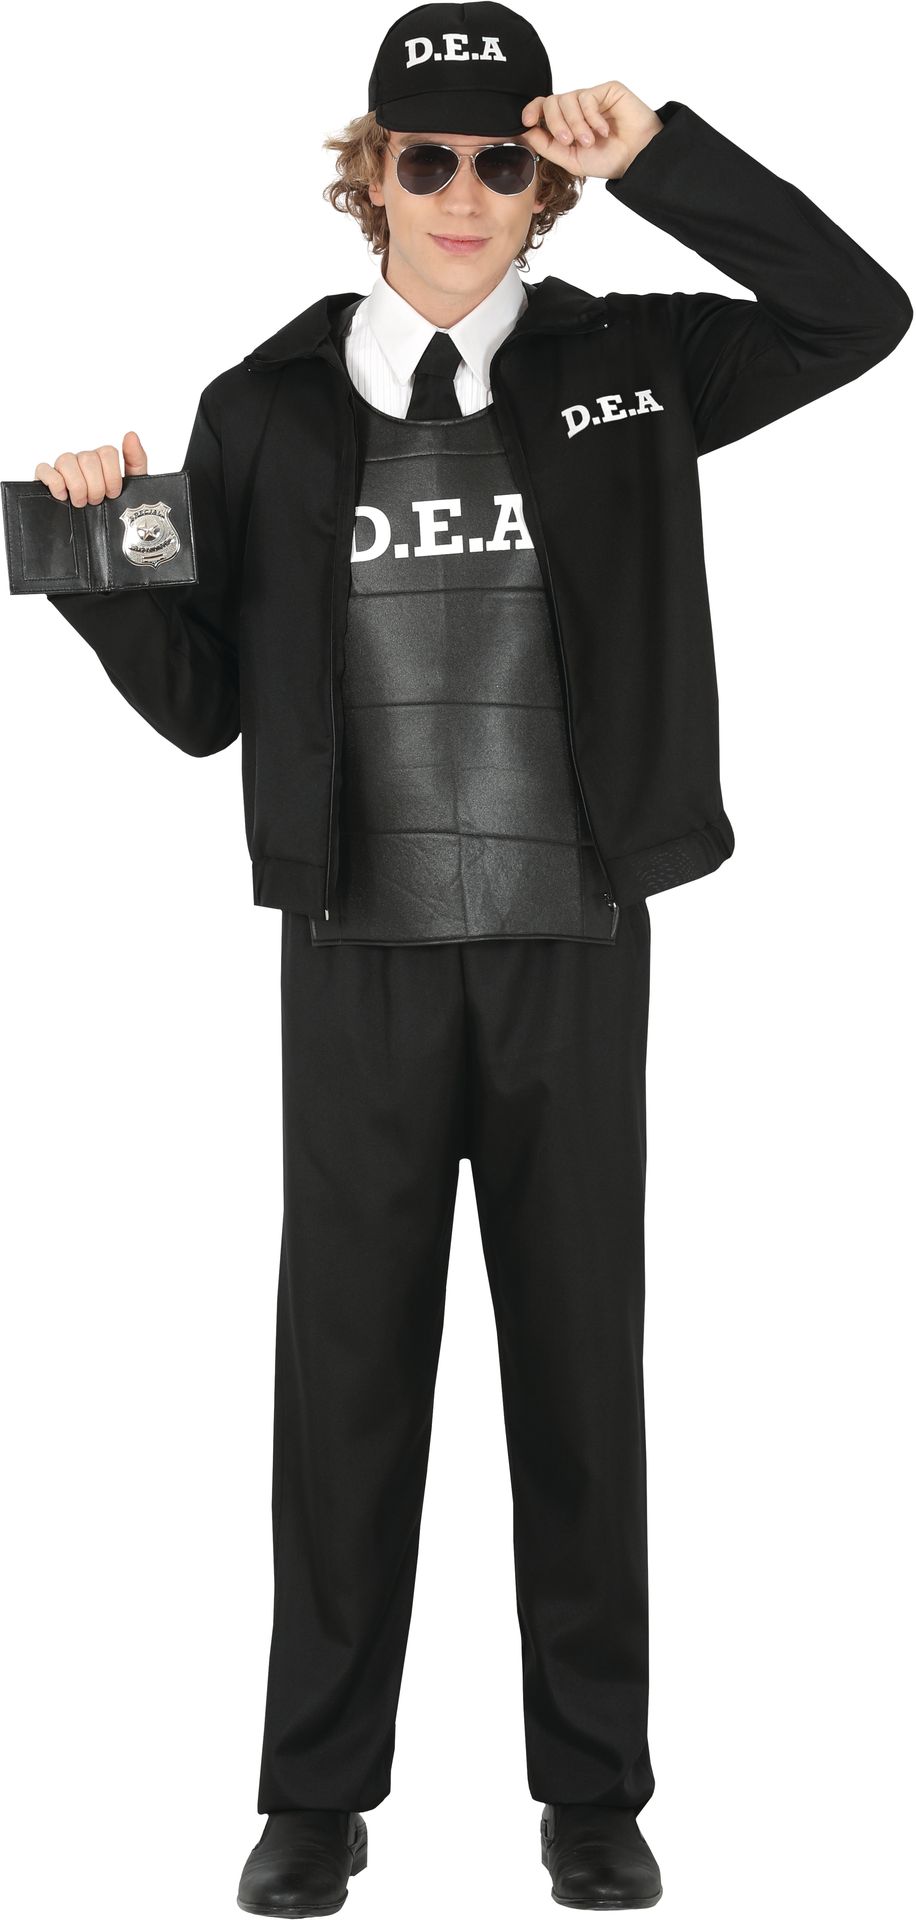 DEA politie kostuum mannen